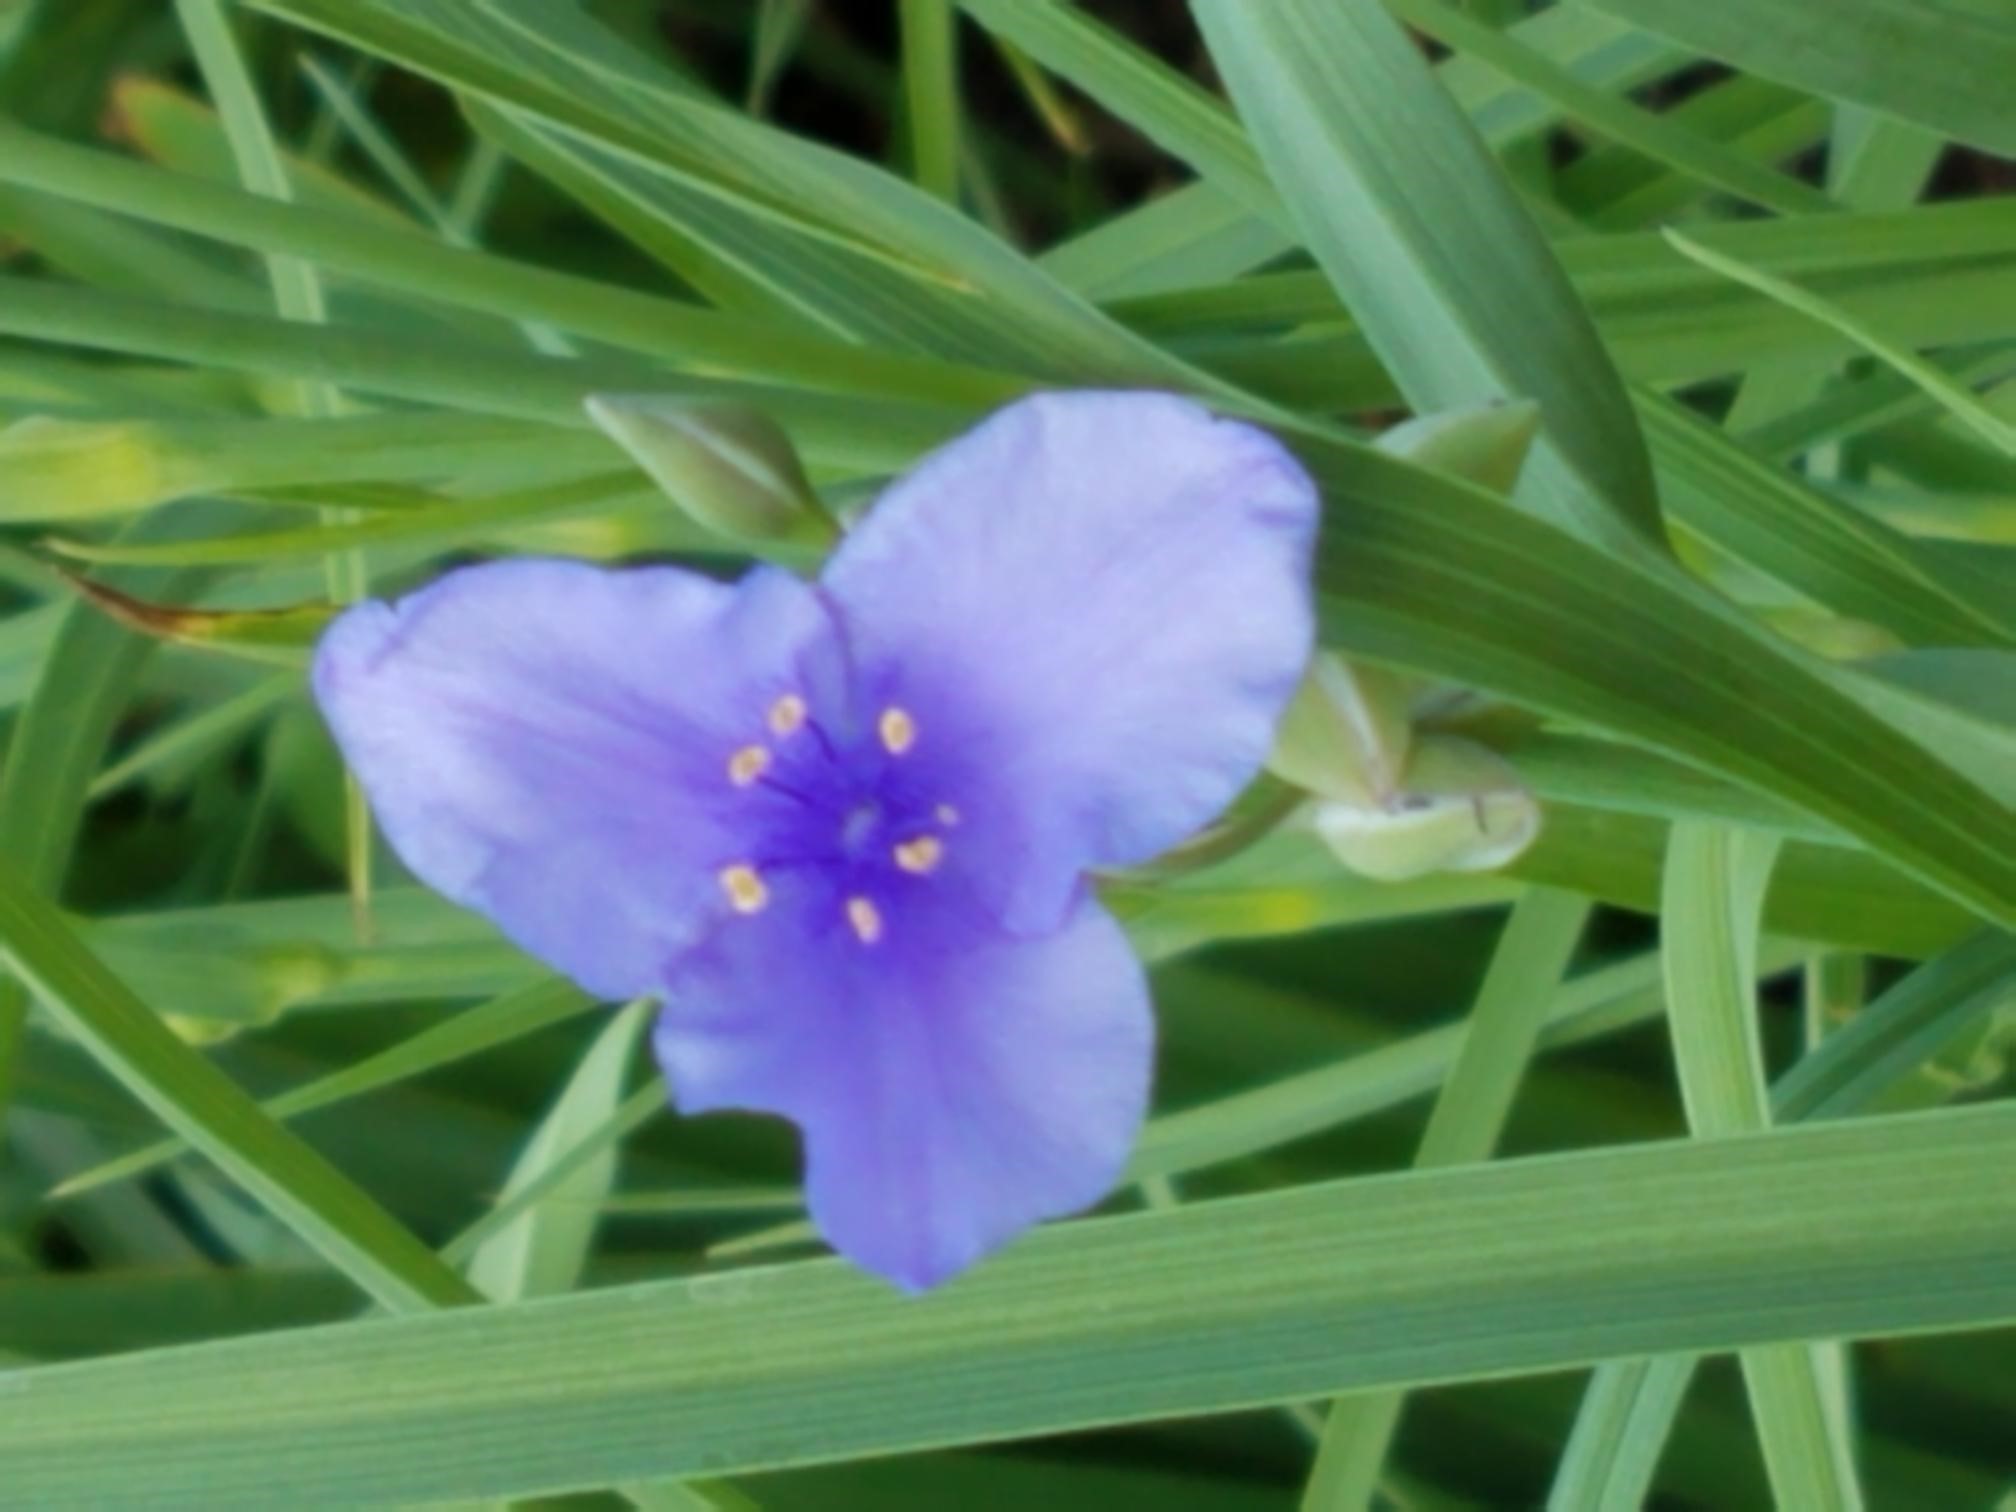 blue flag iris